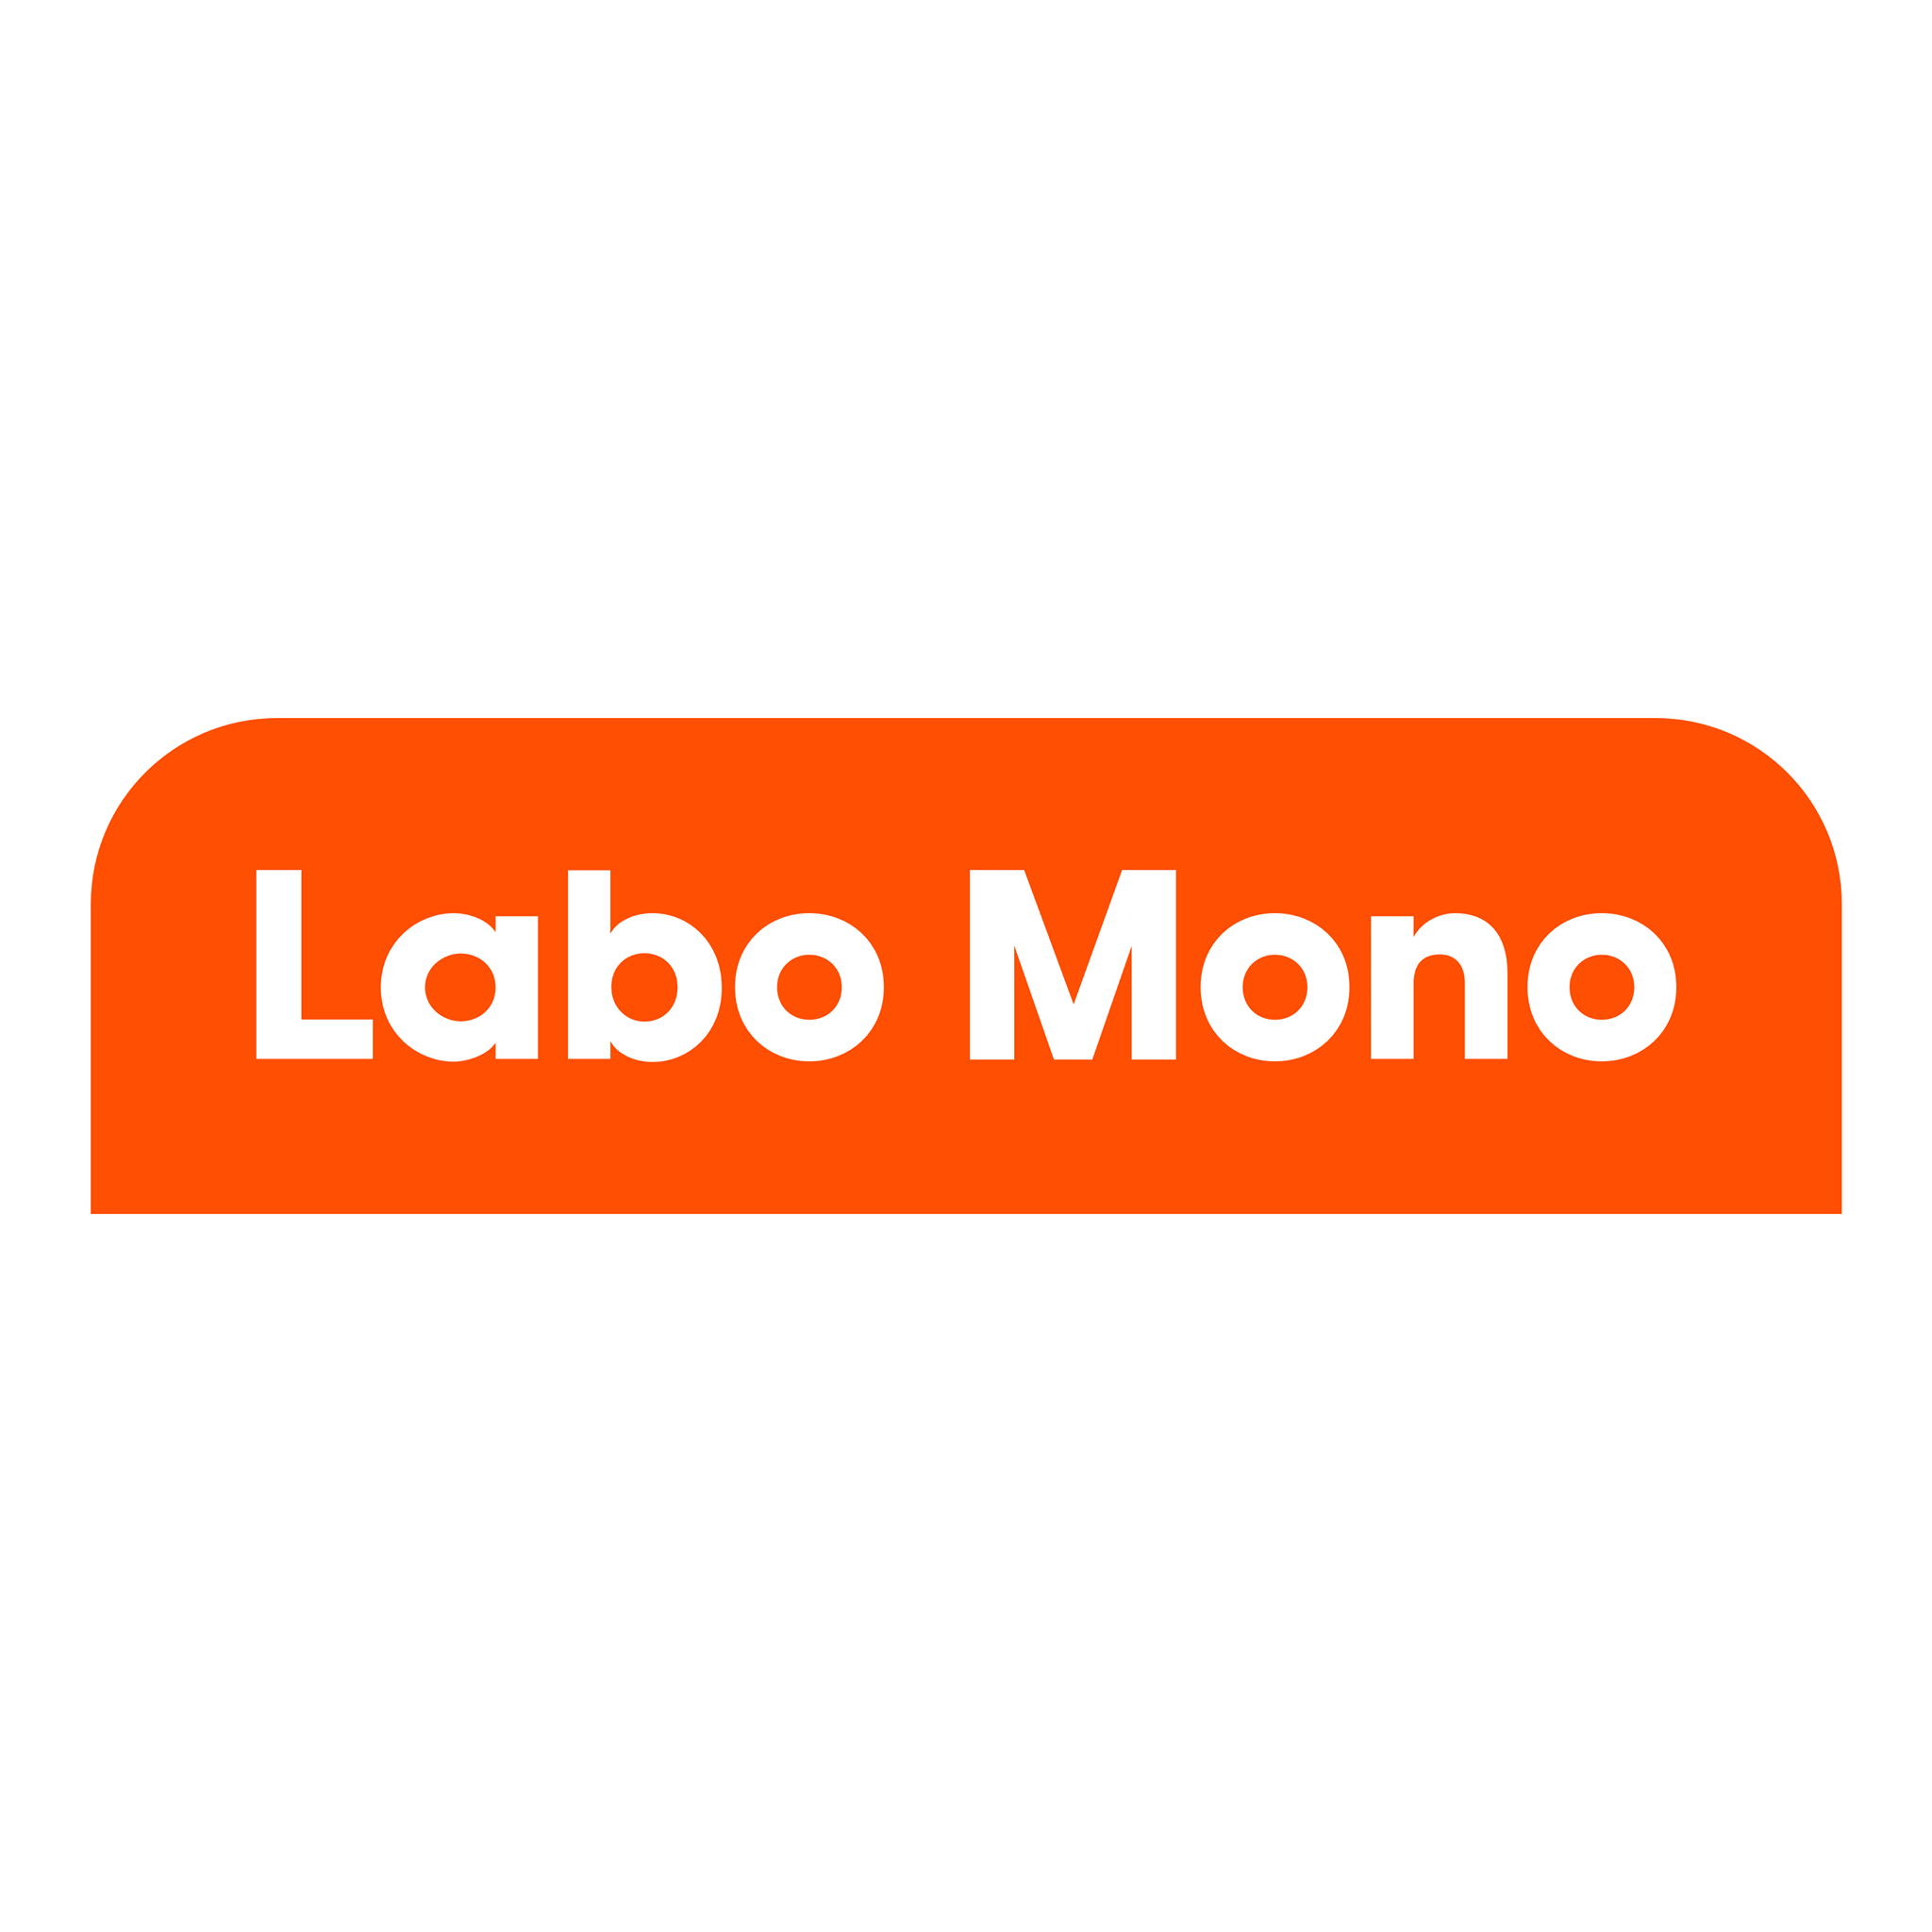 Labo Mono brand logo